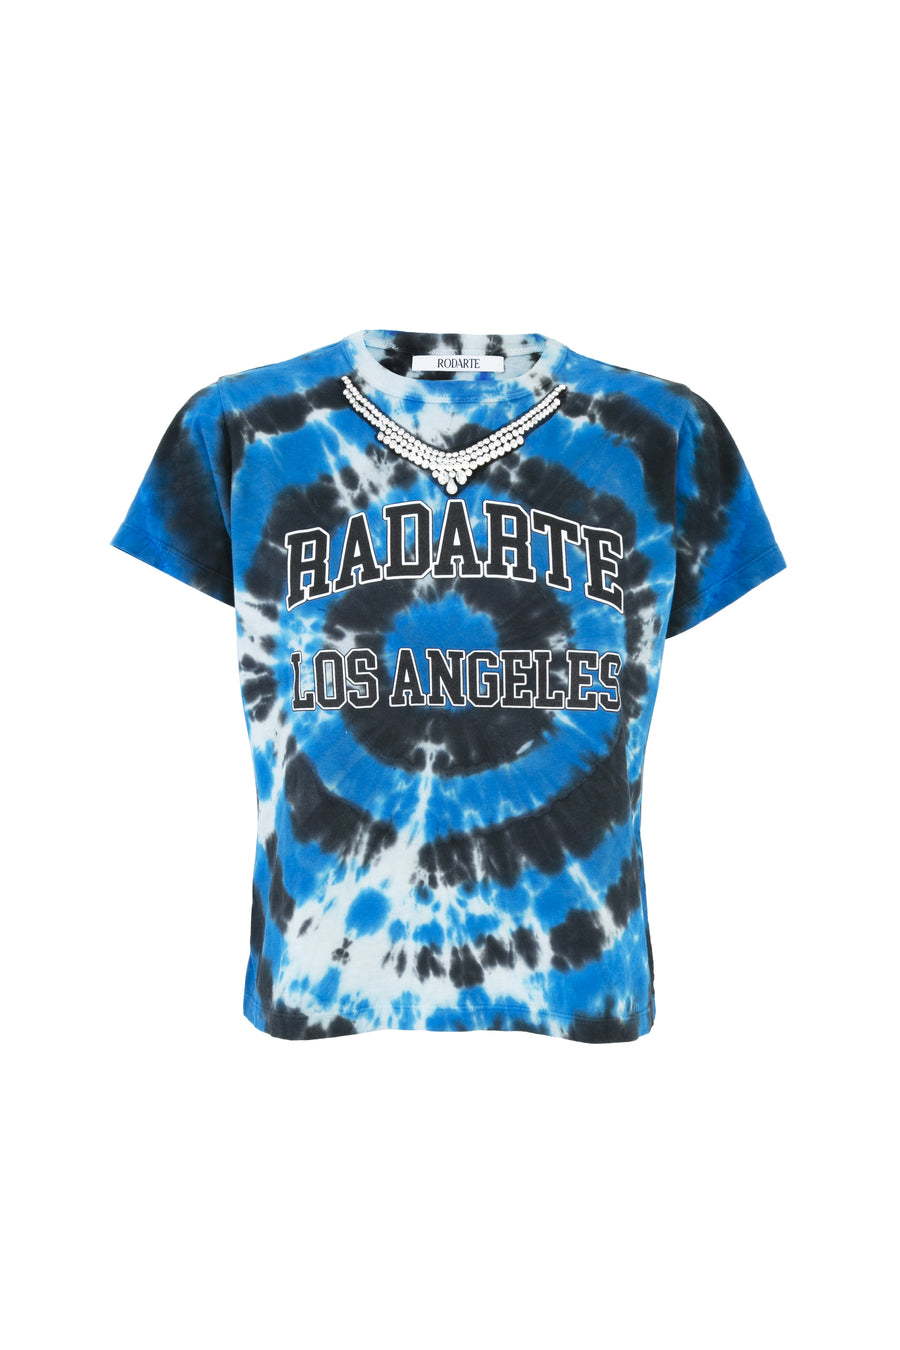 Radarte Logo Tie Dye T-Shirt with Rhinestone Detail